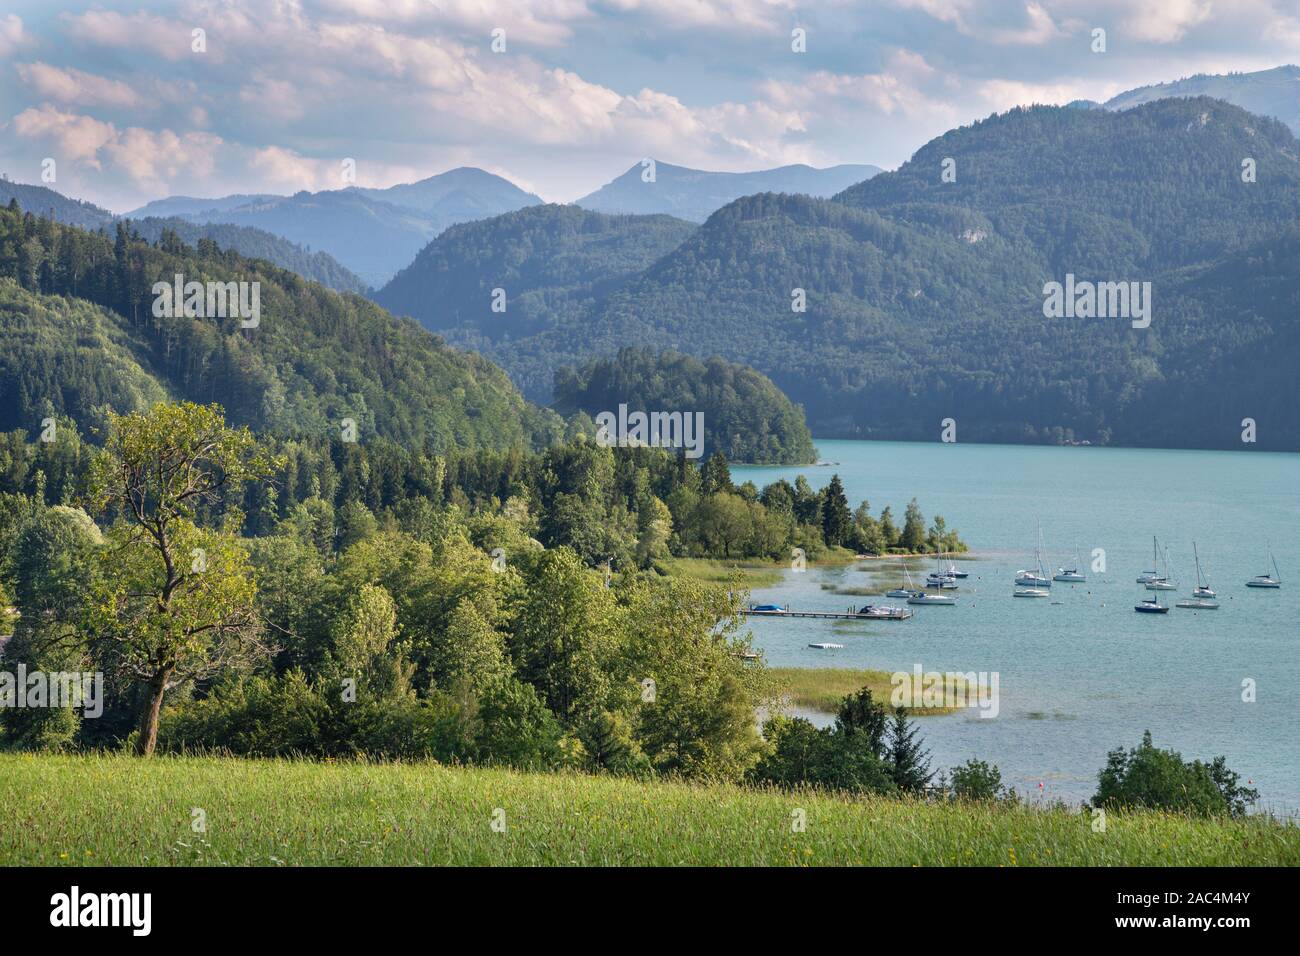 The Alps landscape near the Mondsee lagke. Stock Photo